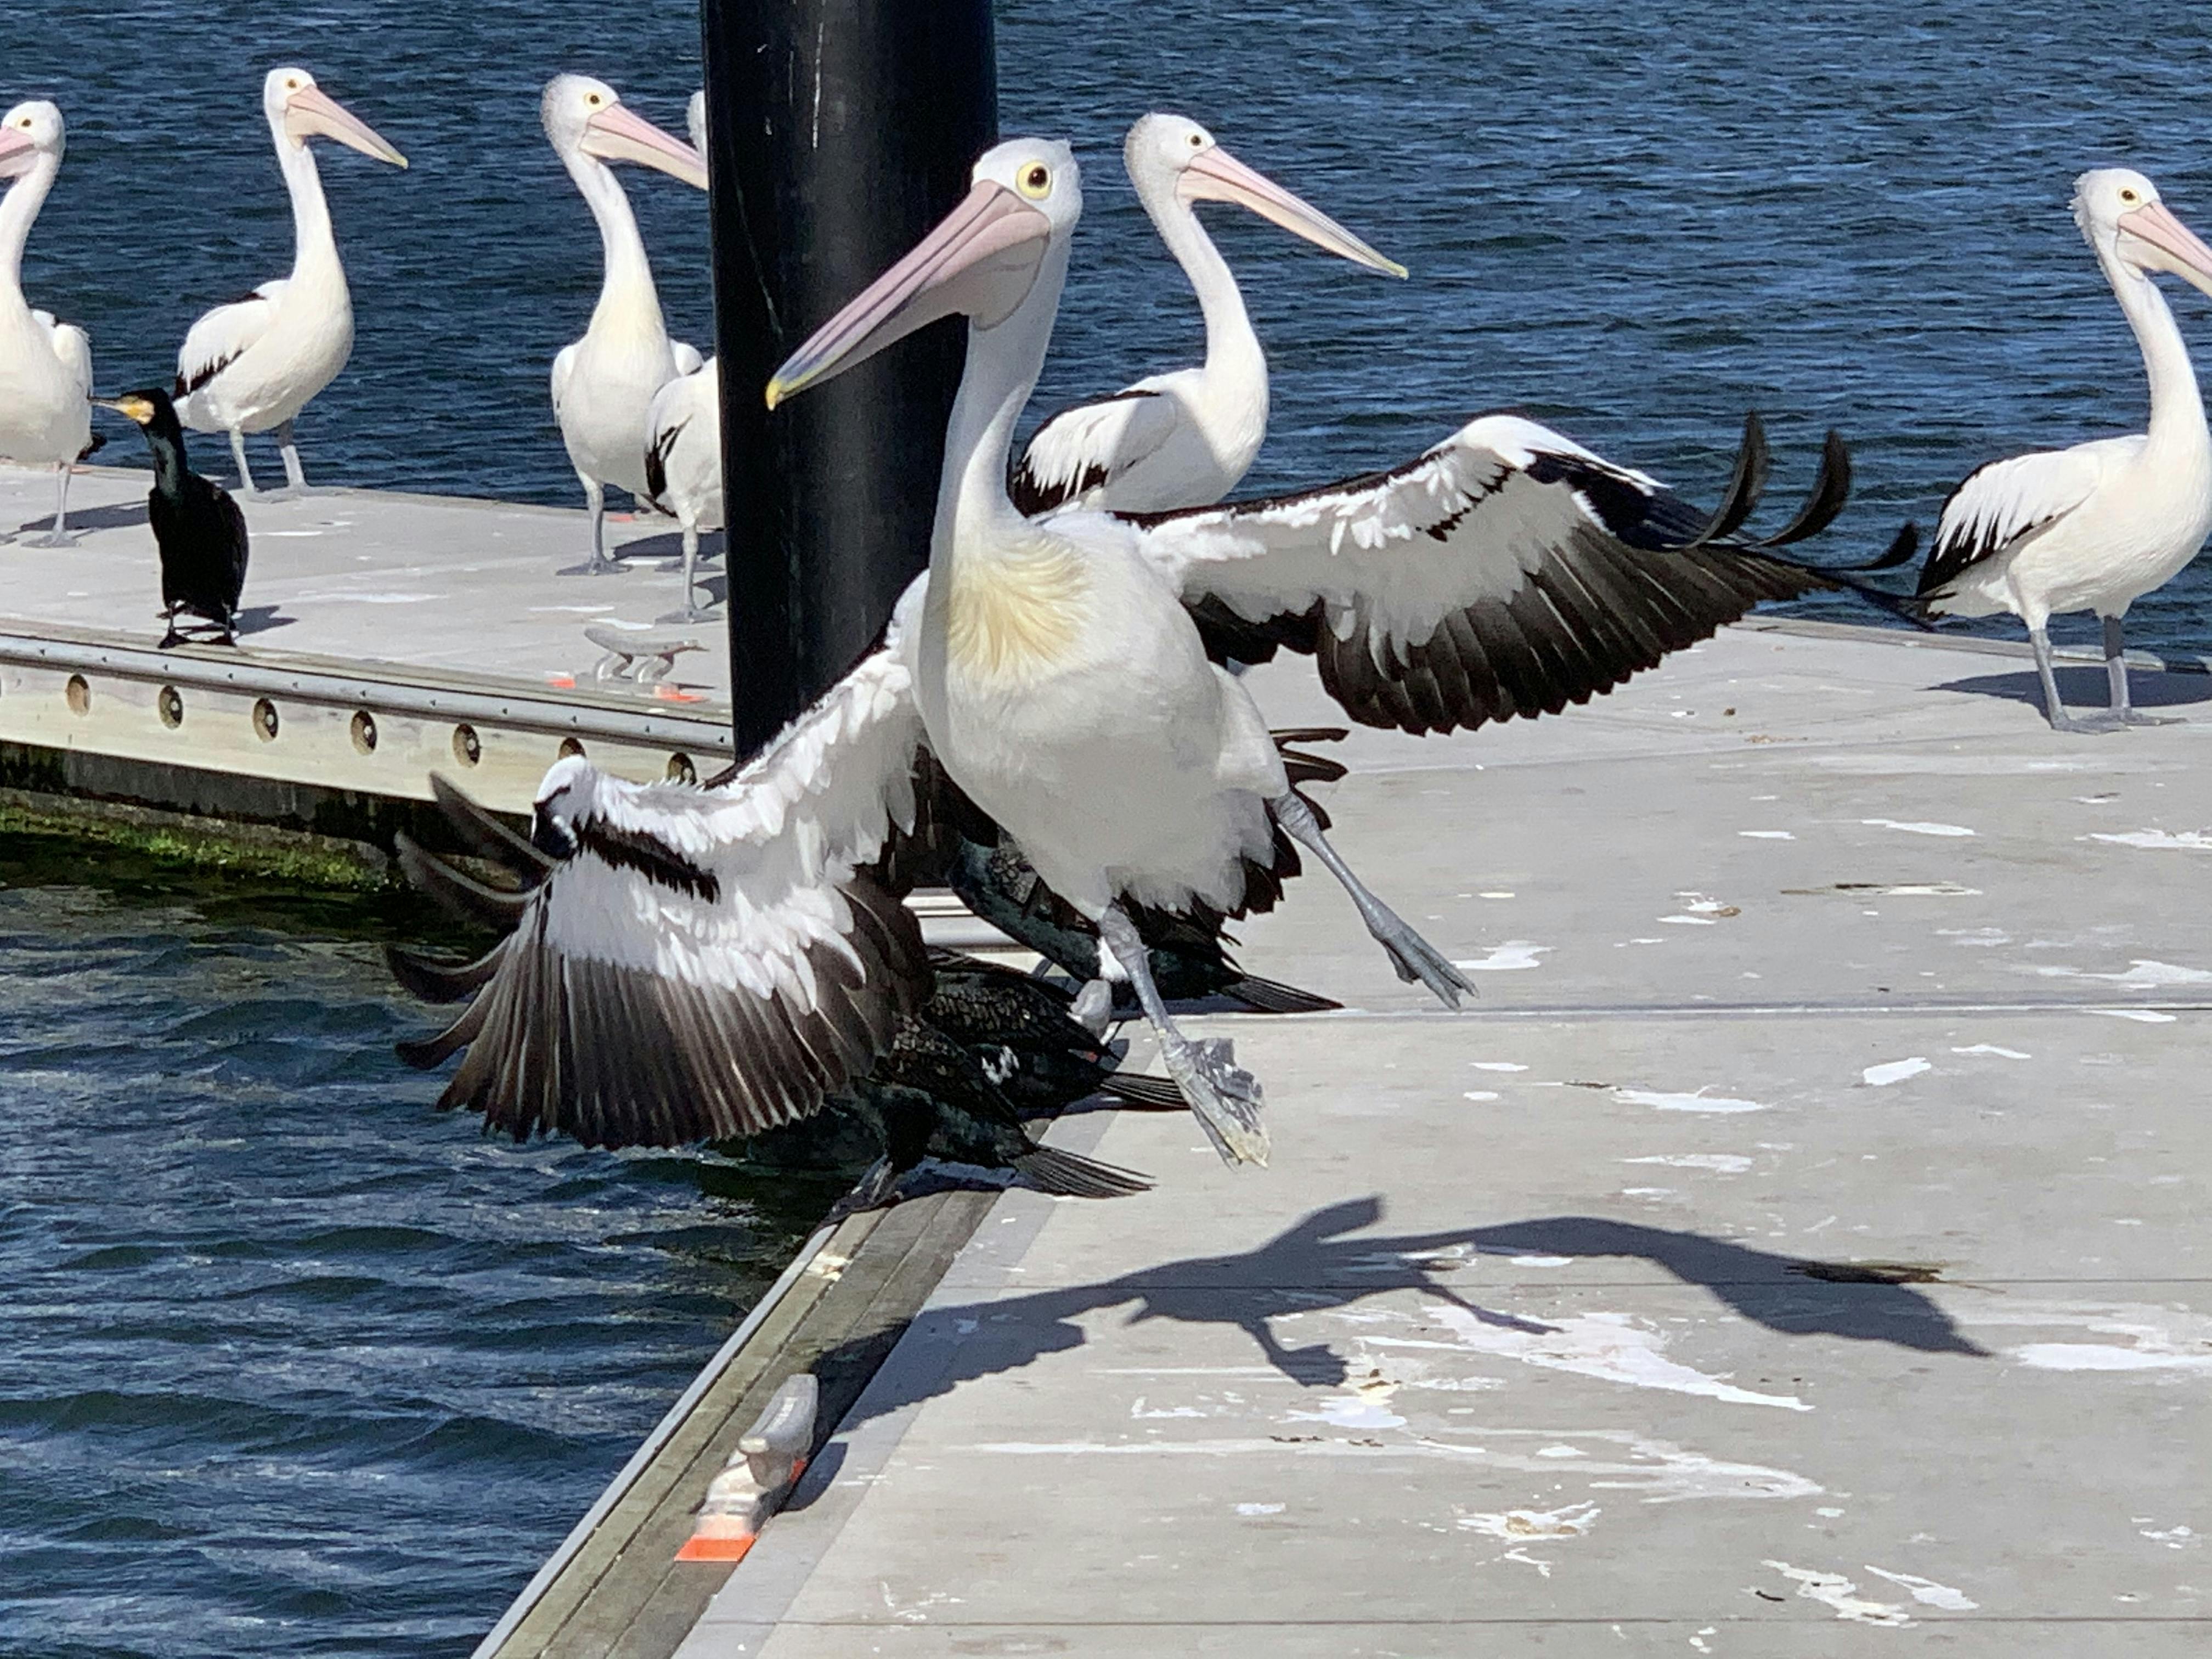 Pelicans enjoying the sun